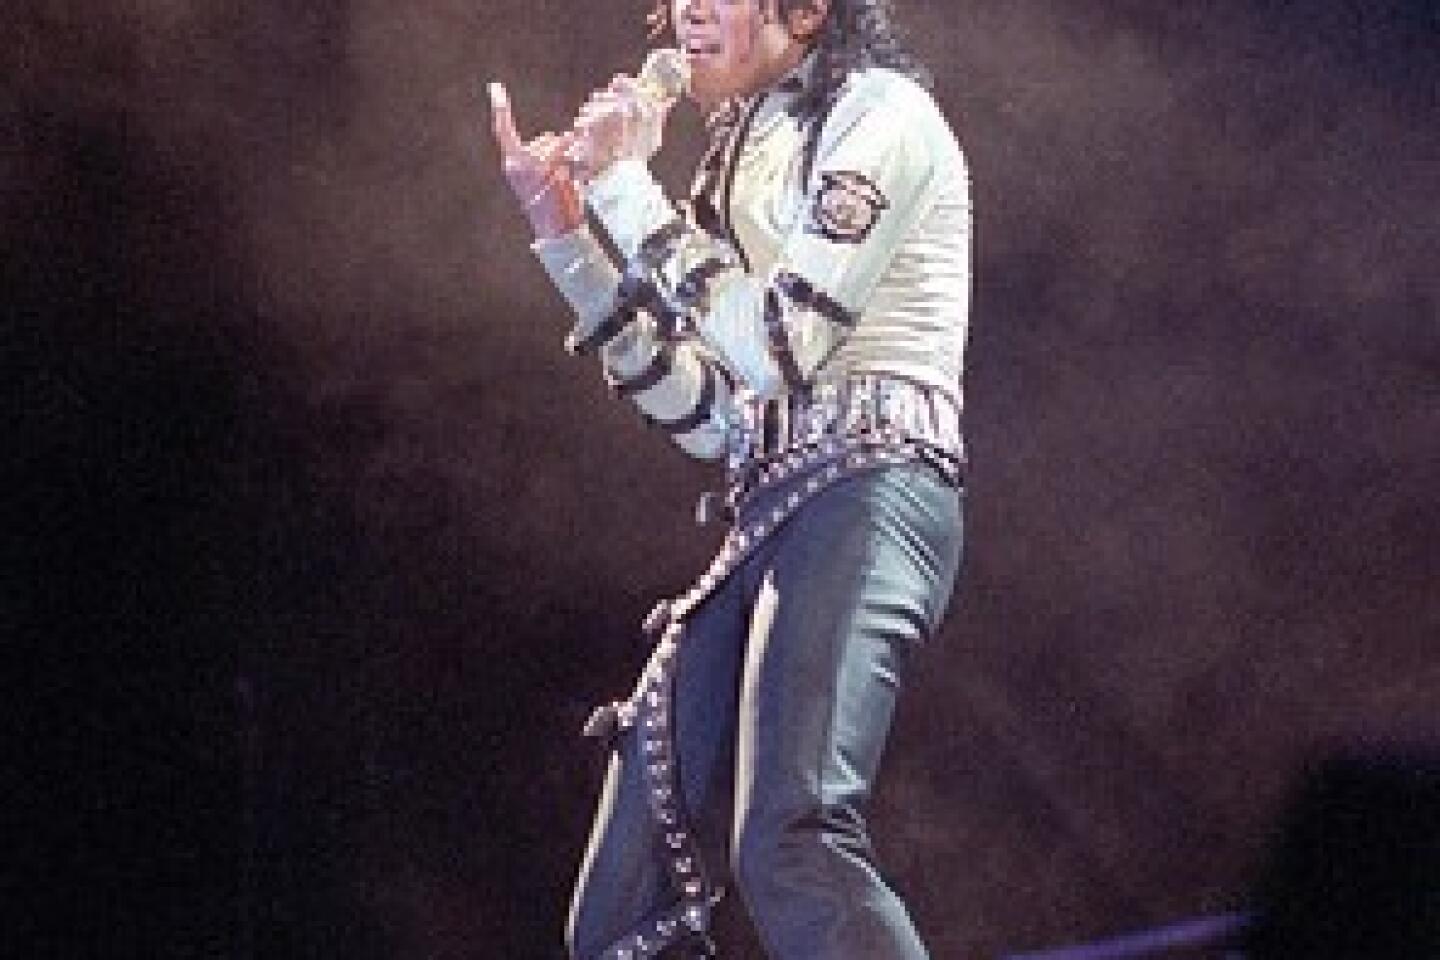 Michael Jackson Single side rhinestone glove collection For Billie Jean